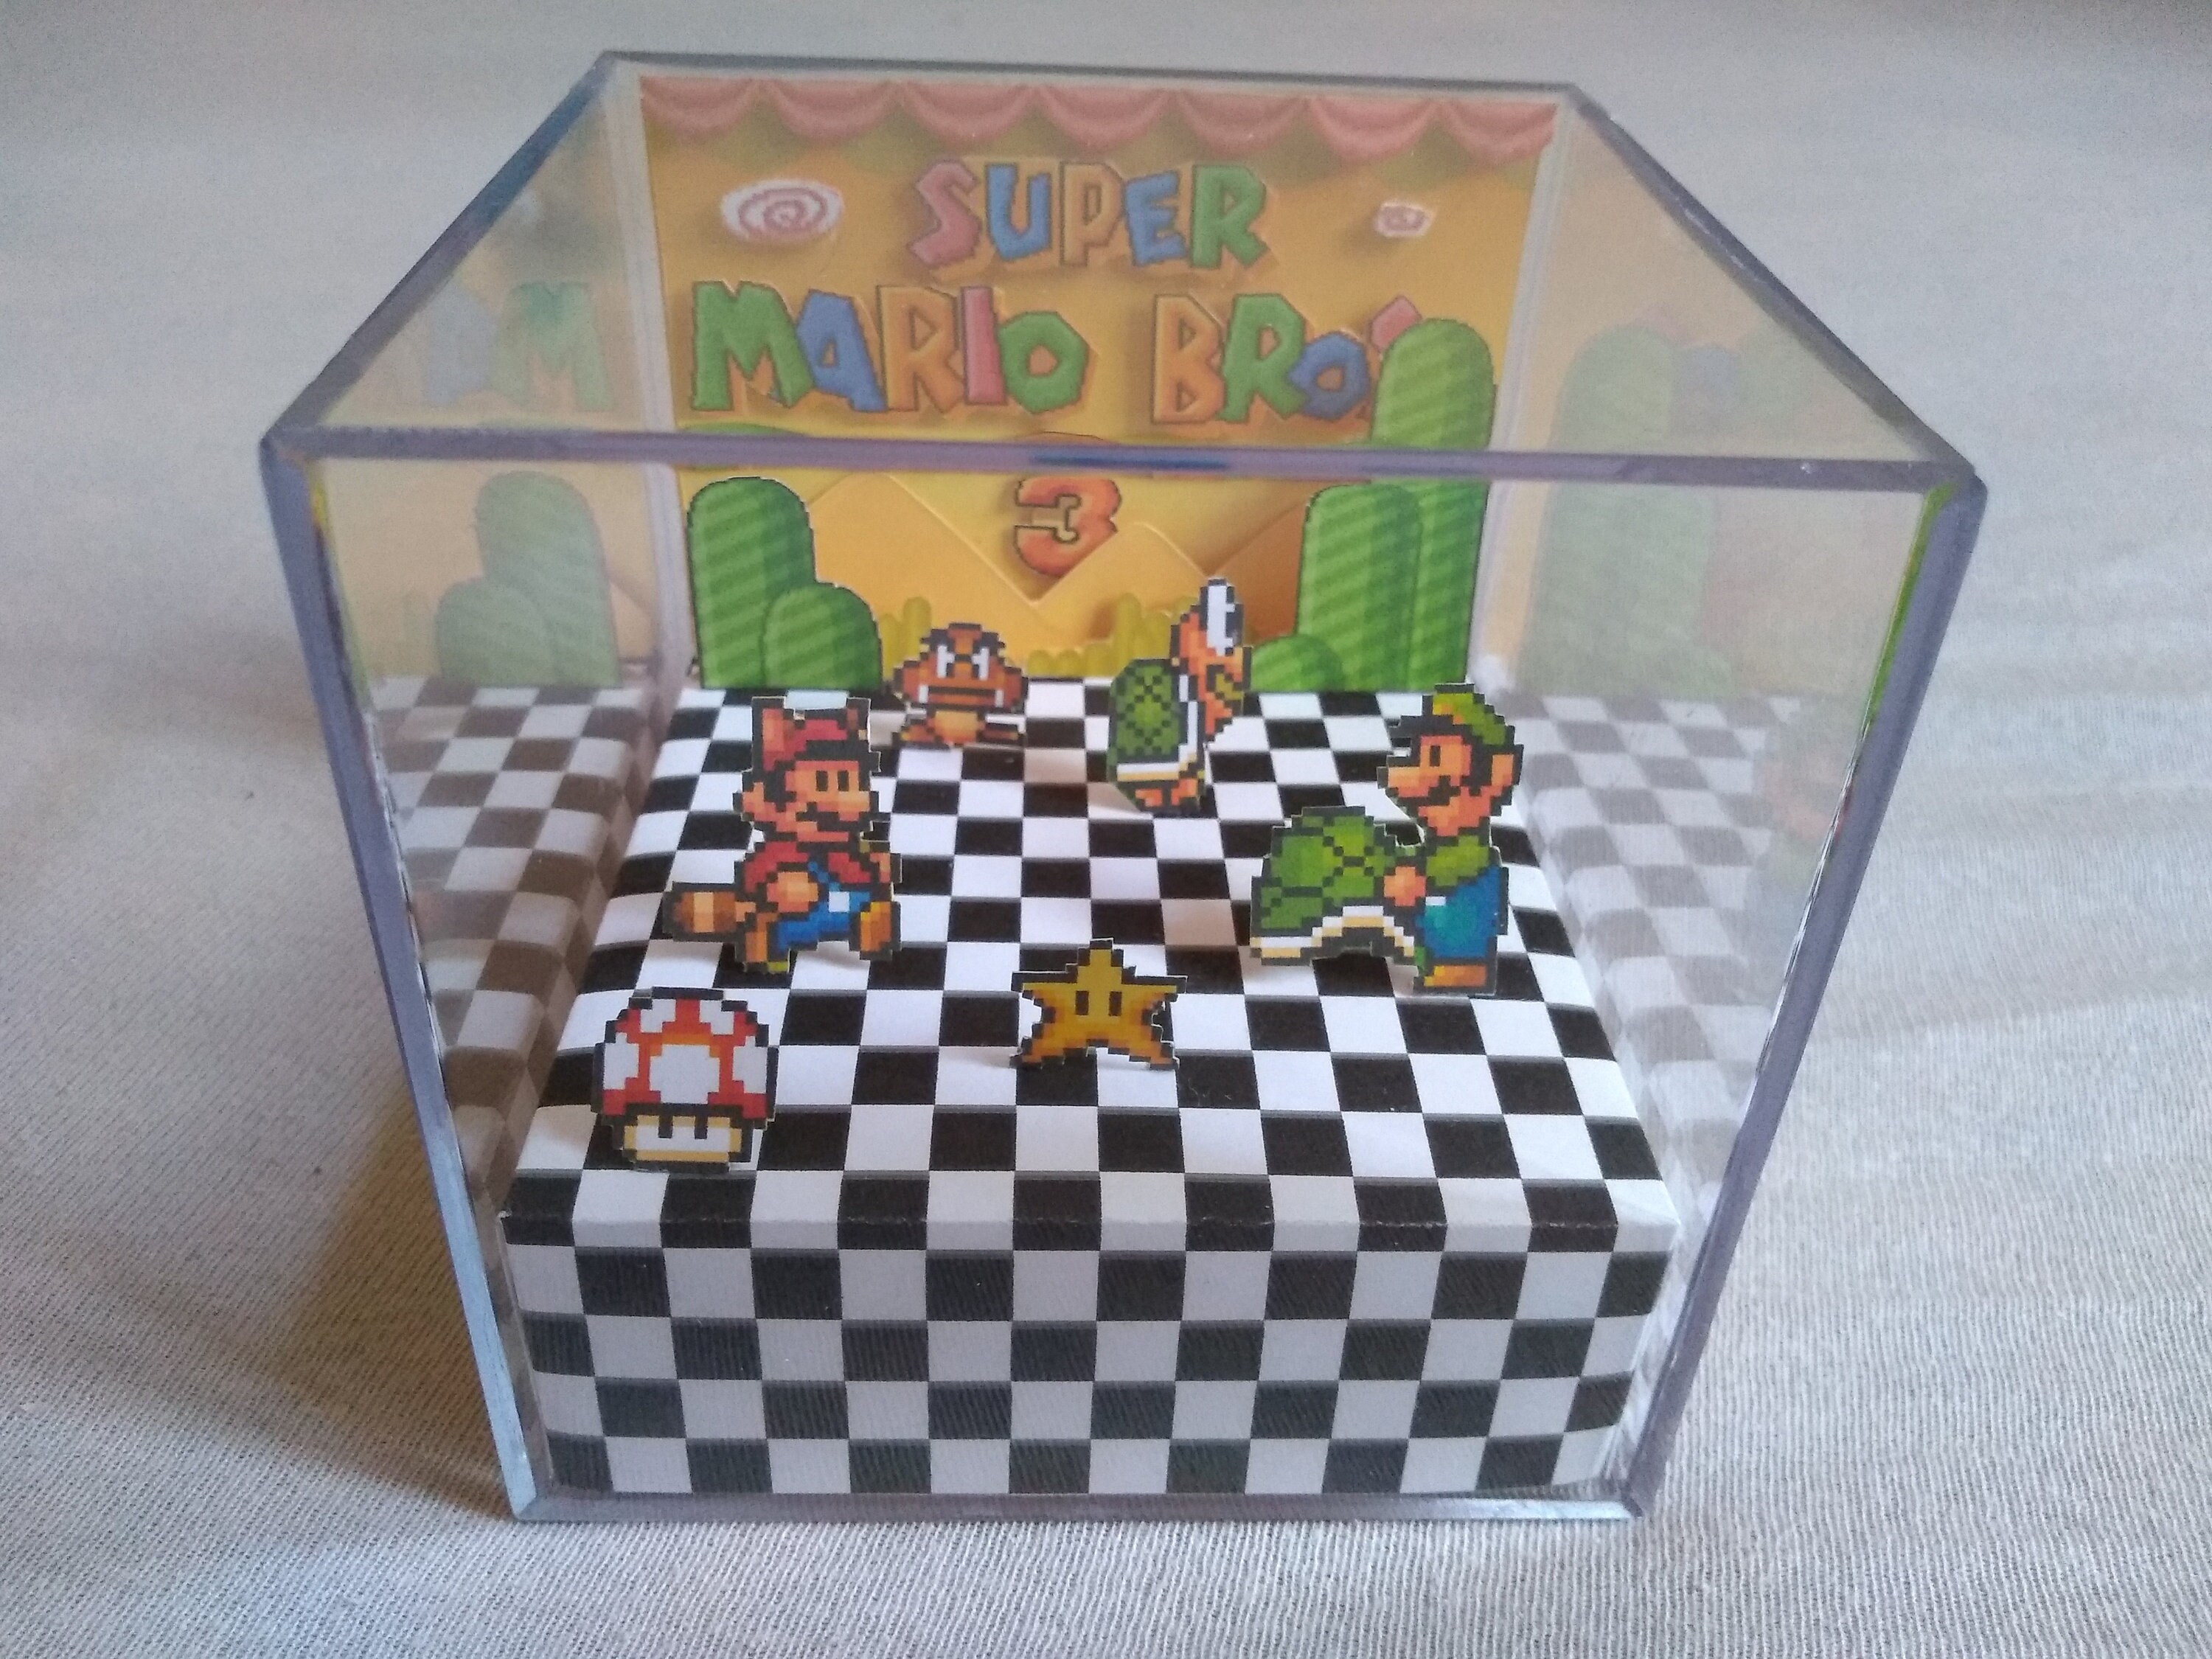 Super Mario World- Geekrama diorama cubo Super Nintendo snes